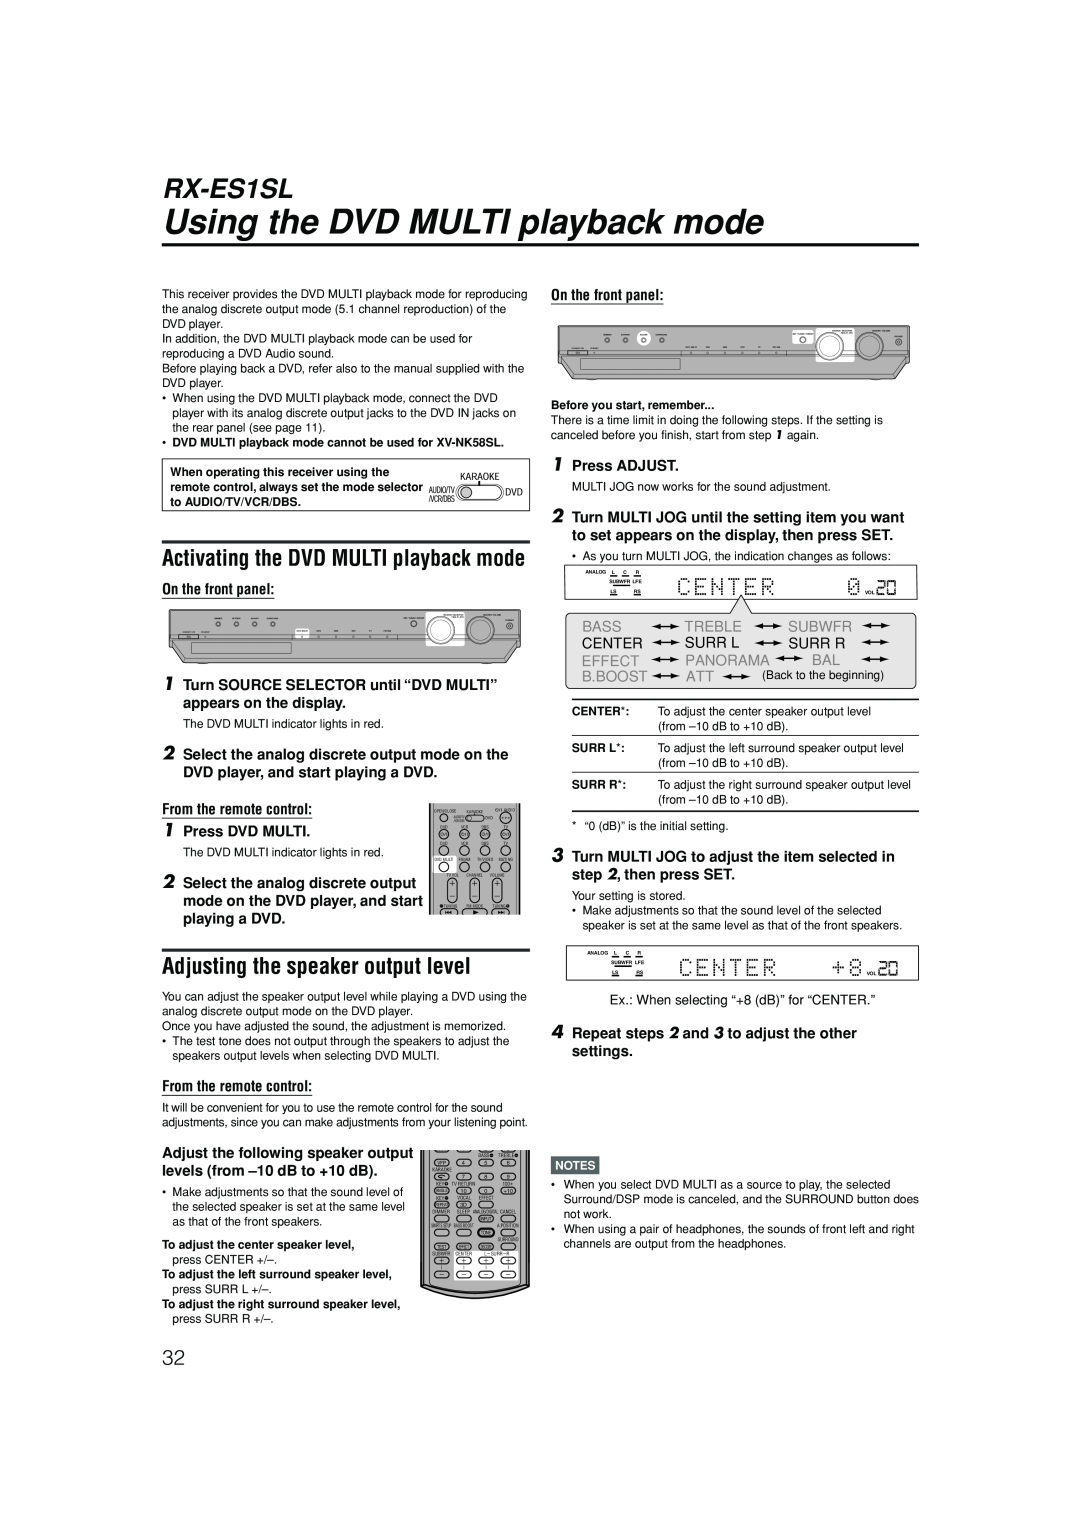 JVC LVT1002-012B manual Using the DVD MULTI playback mode, Adjusting the speaker output level, RX-ES1SL, On the front panel 